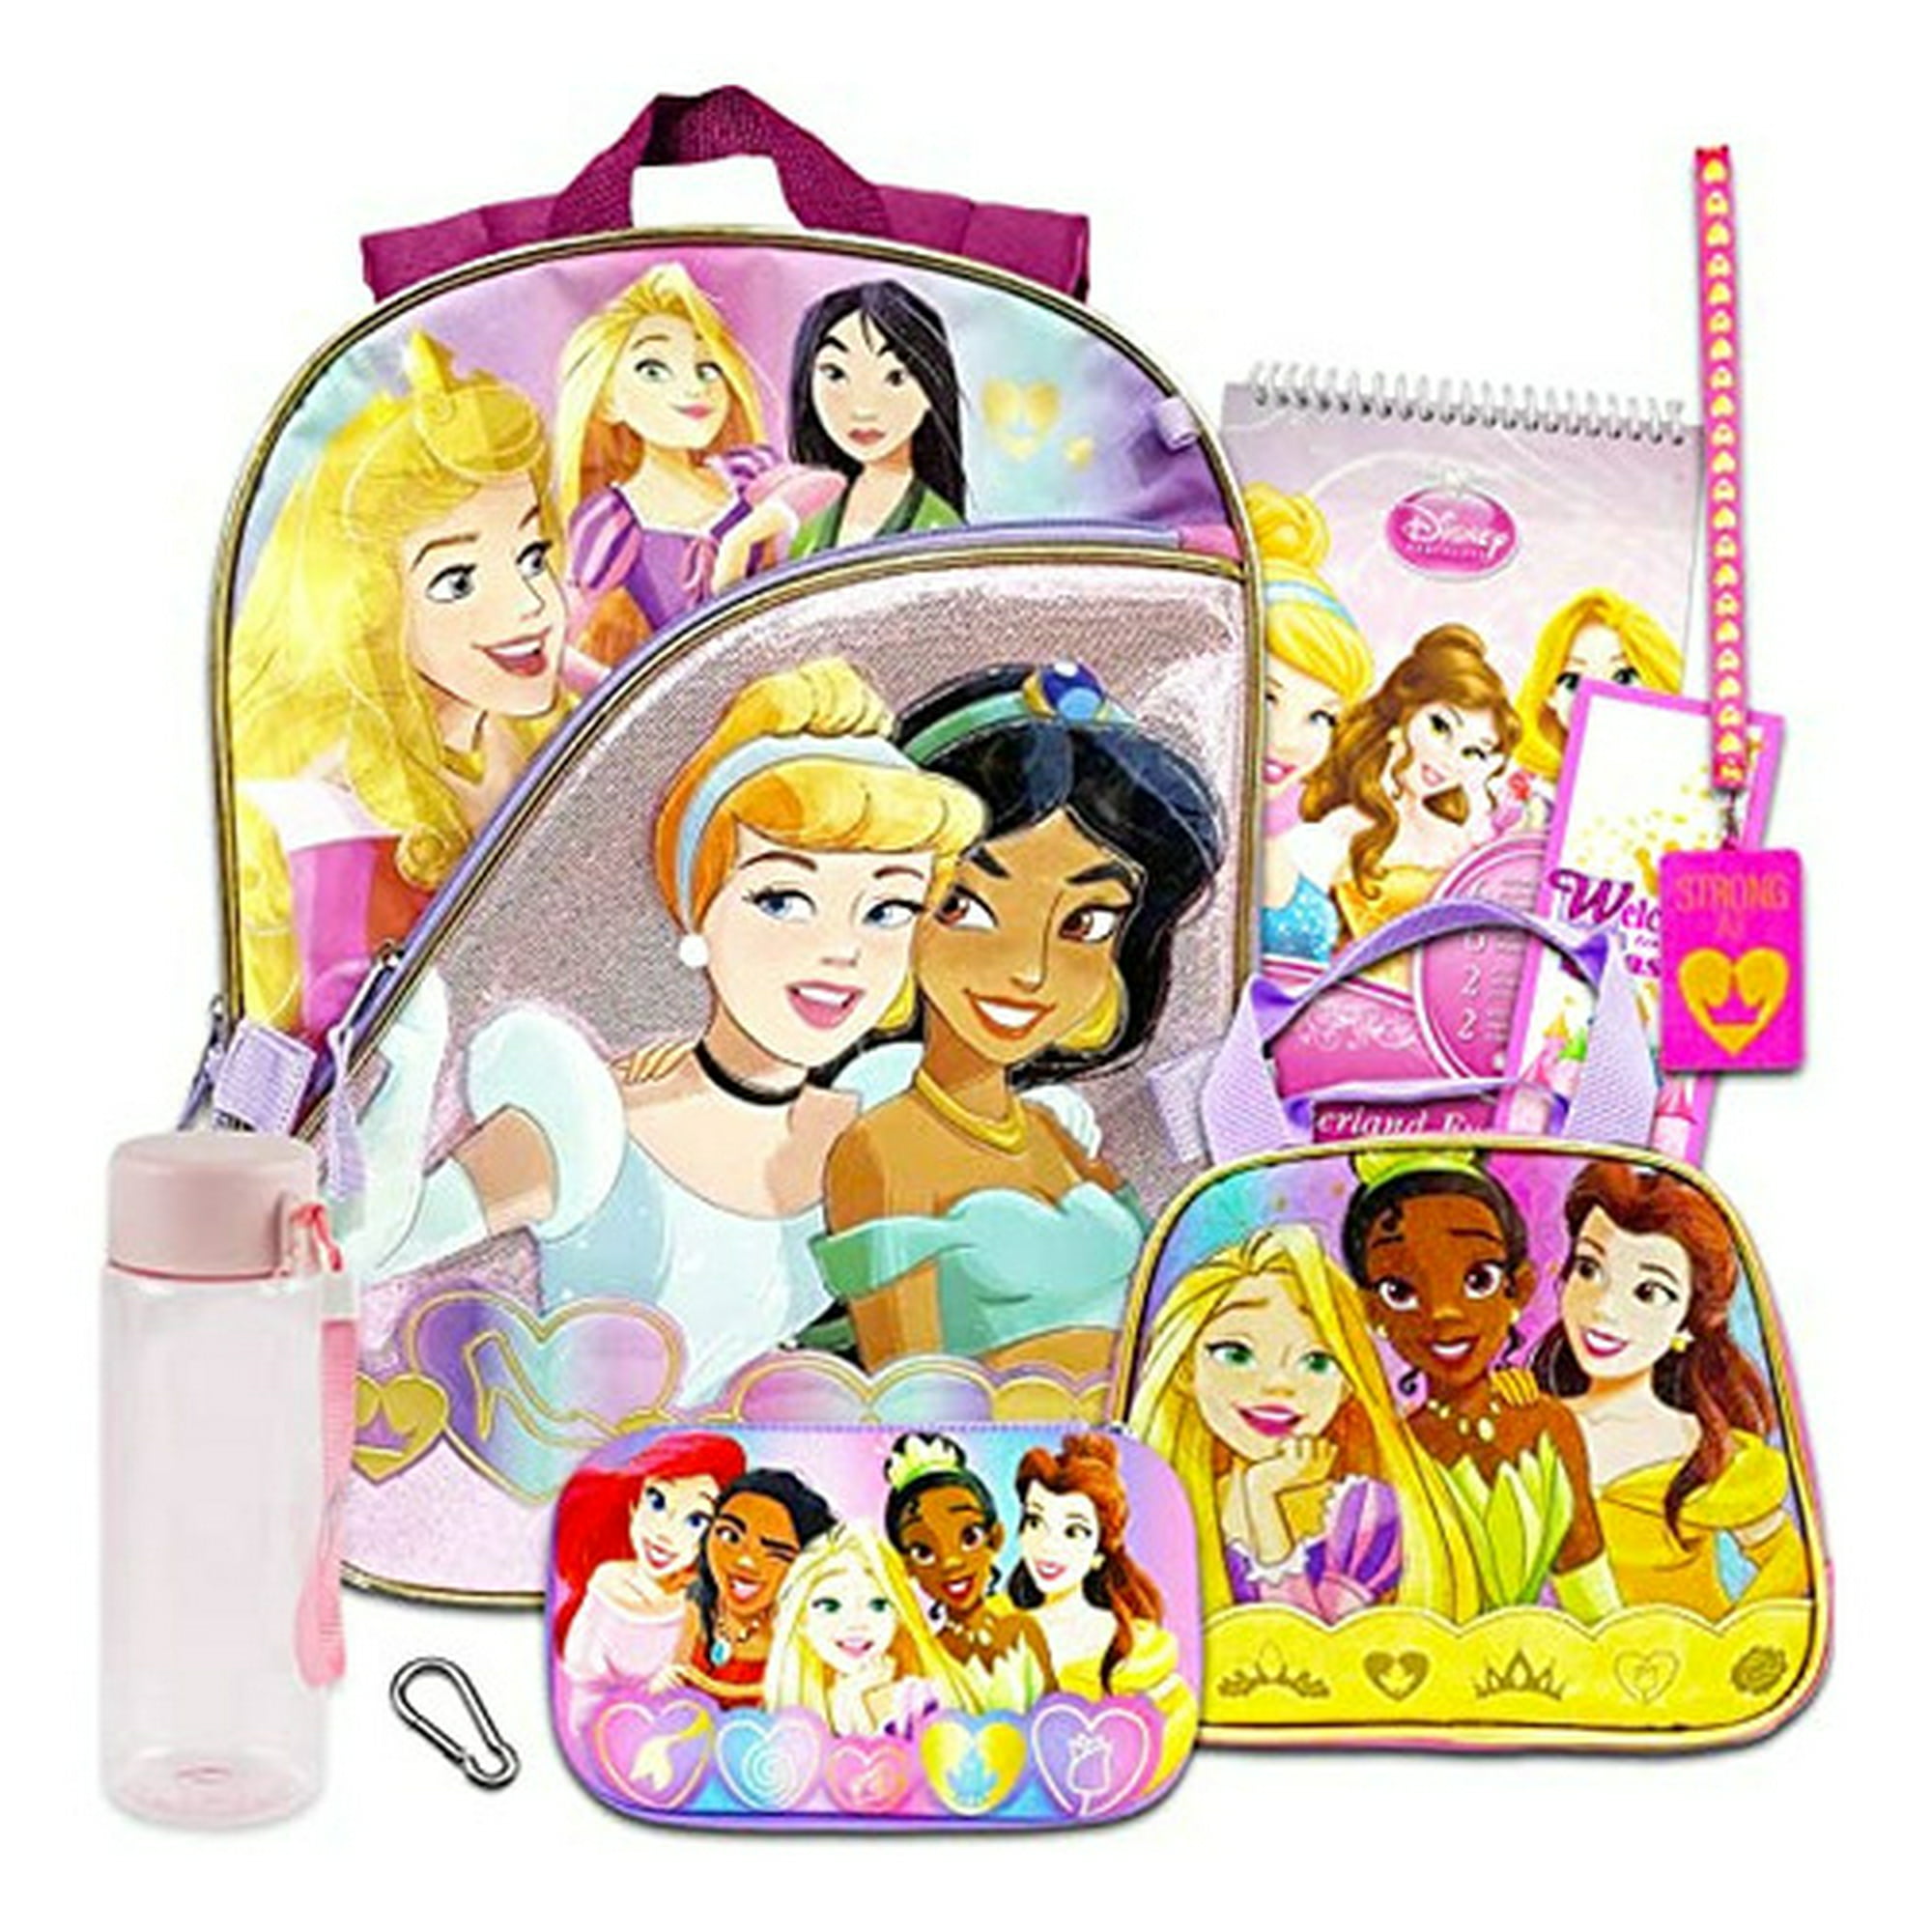  Disney Princess Juego de lonchera para niñas, paquete